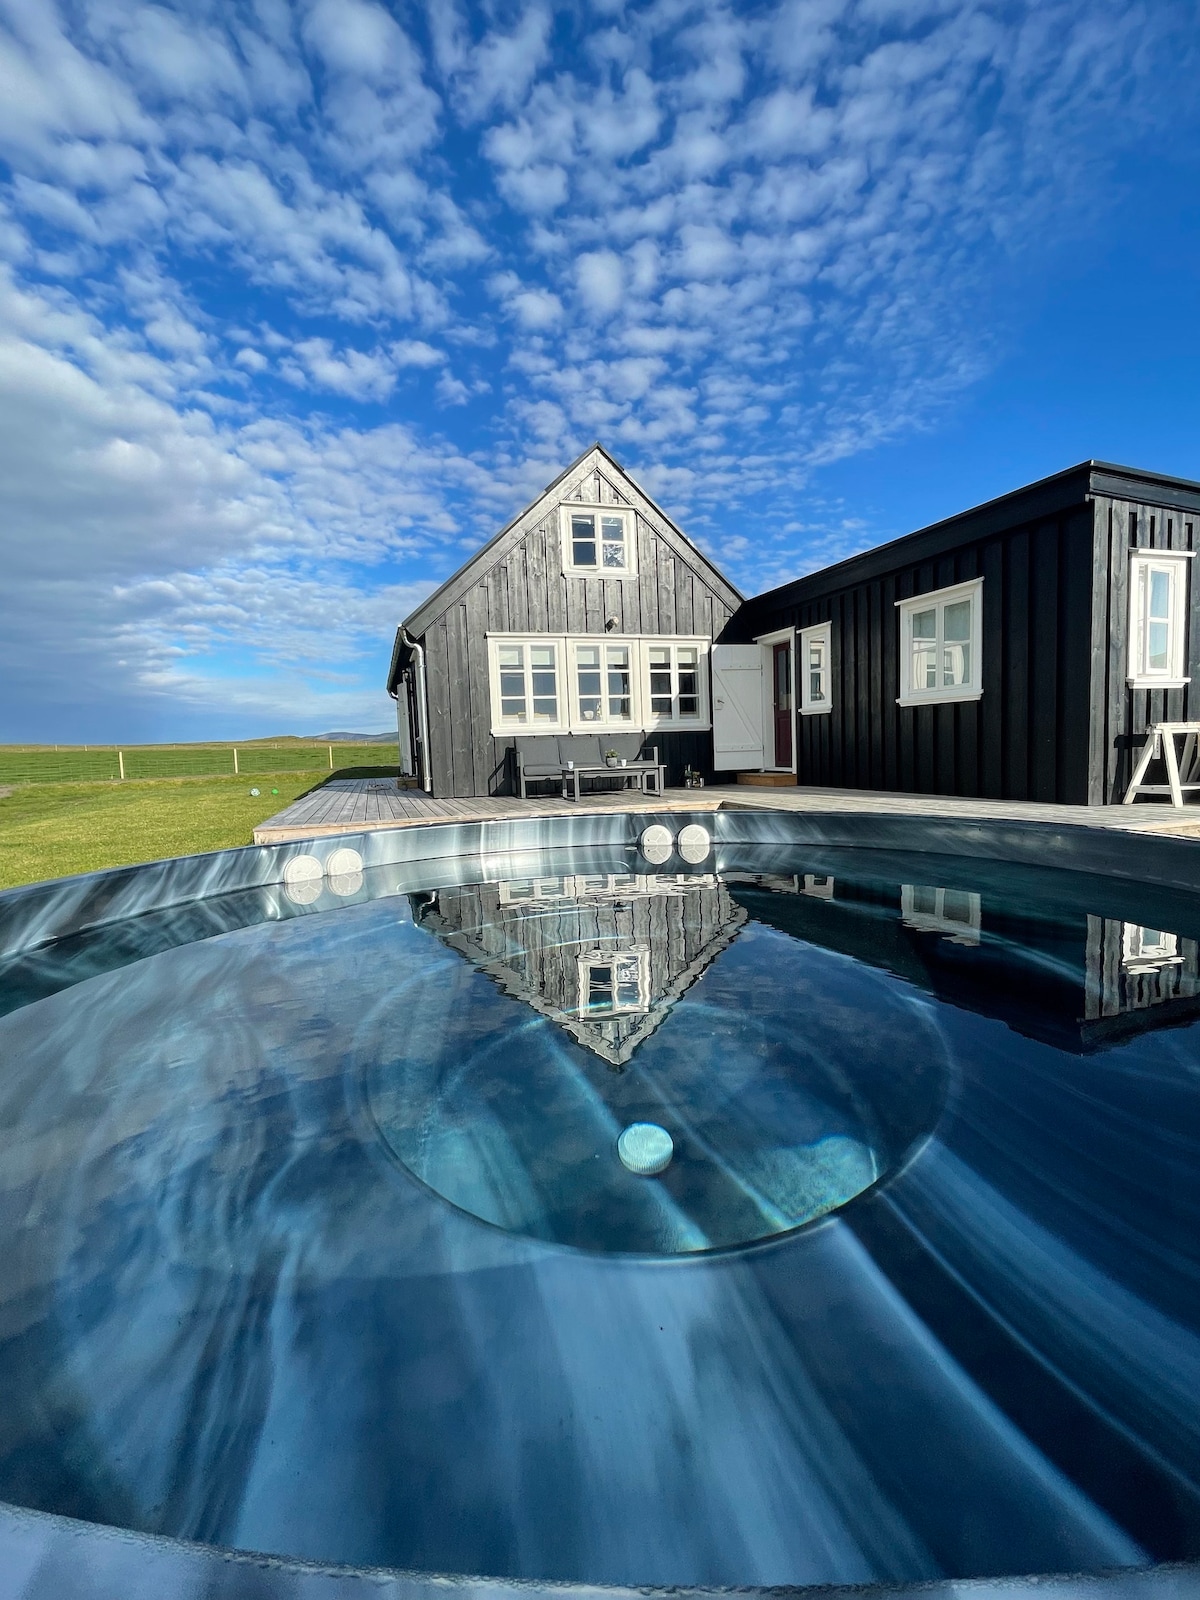 The Black Icelandic House